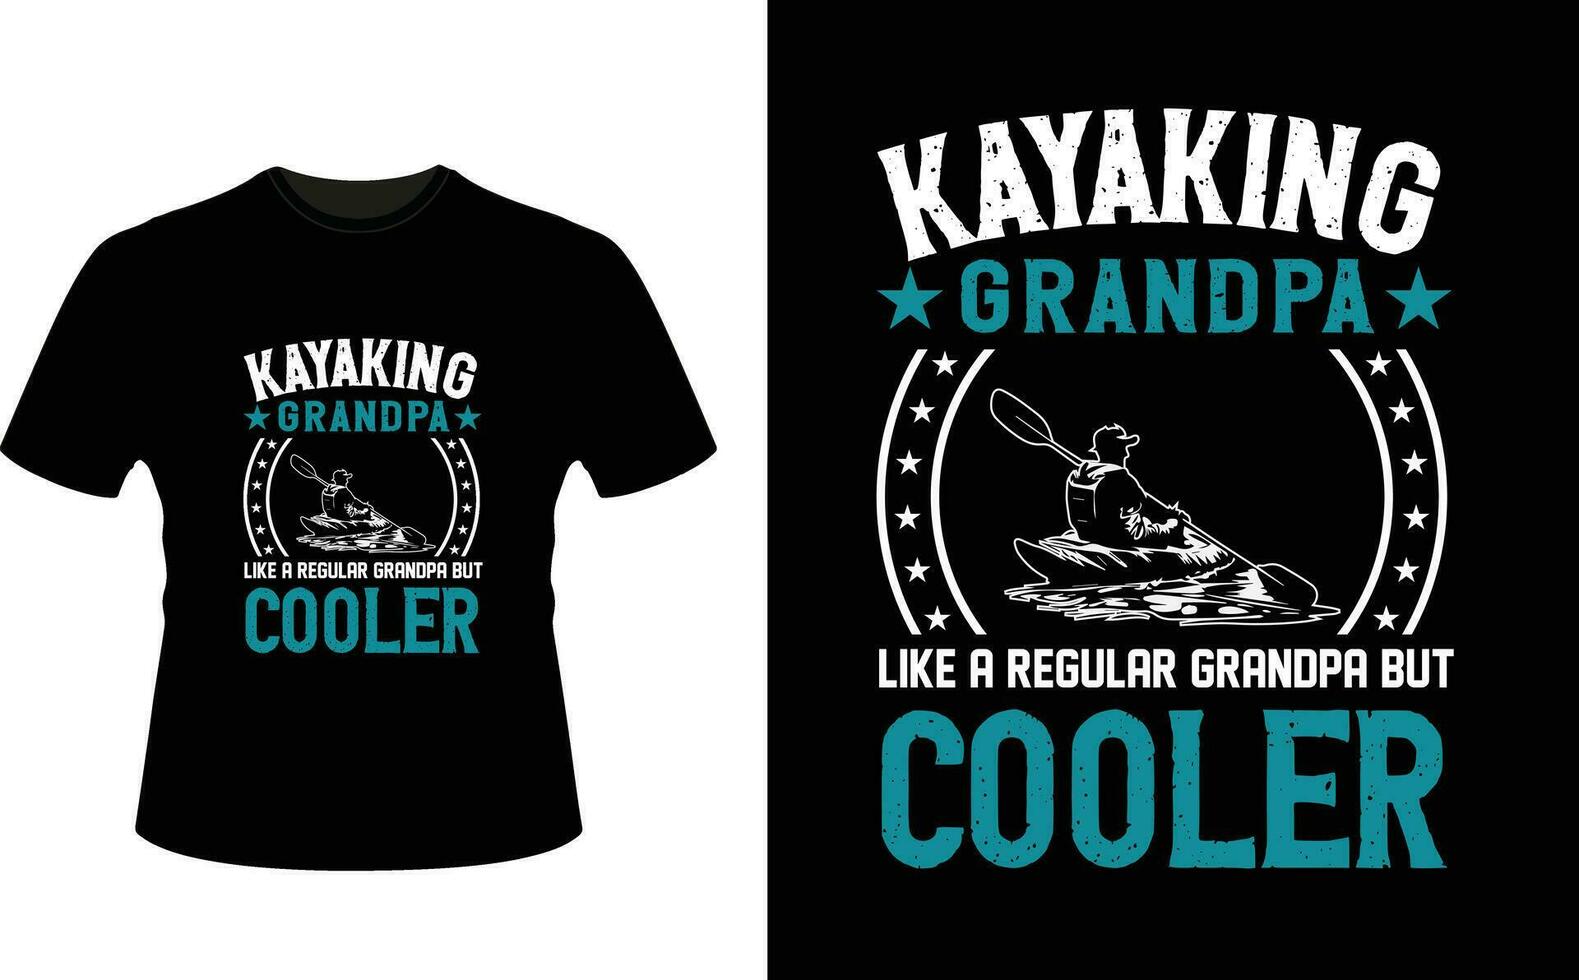 Kajak fahren Opa mögen ein regulär Opa aber Kühler oder Großvater T-Shirt Design oder Großvater Tag t Hemd Design vektor